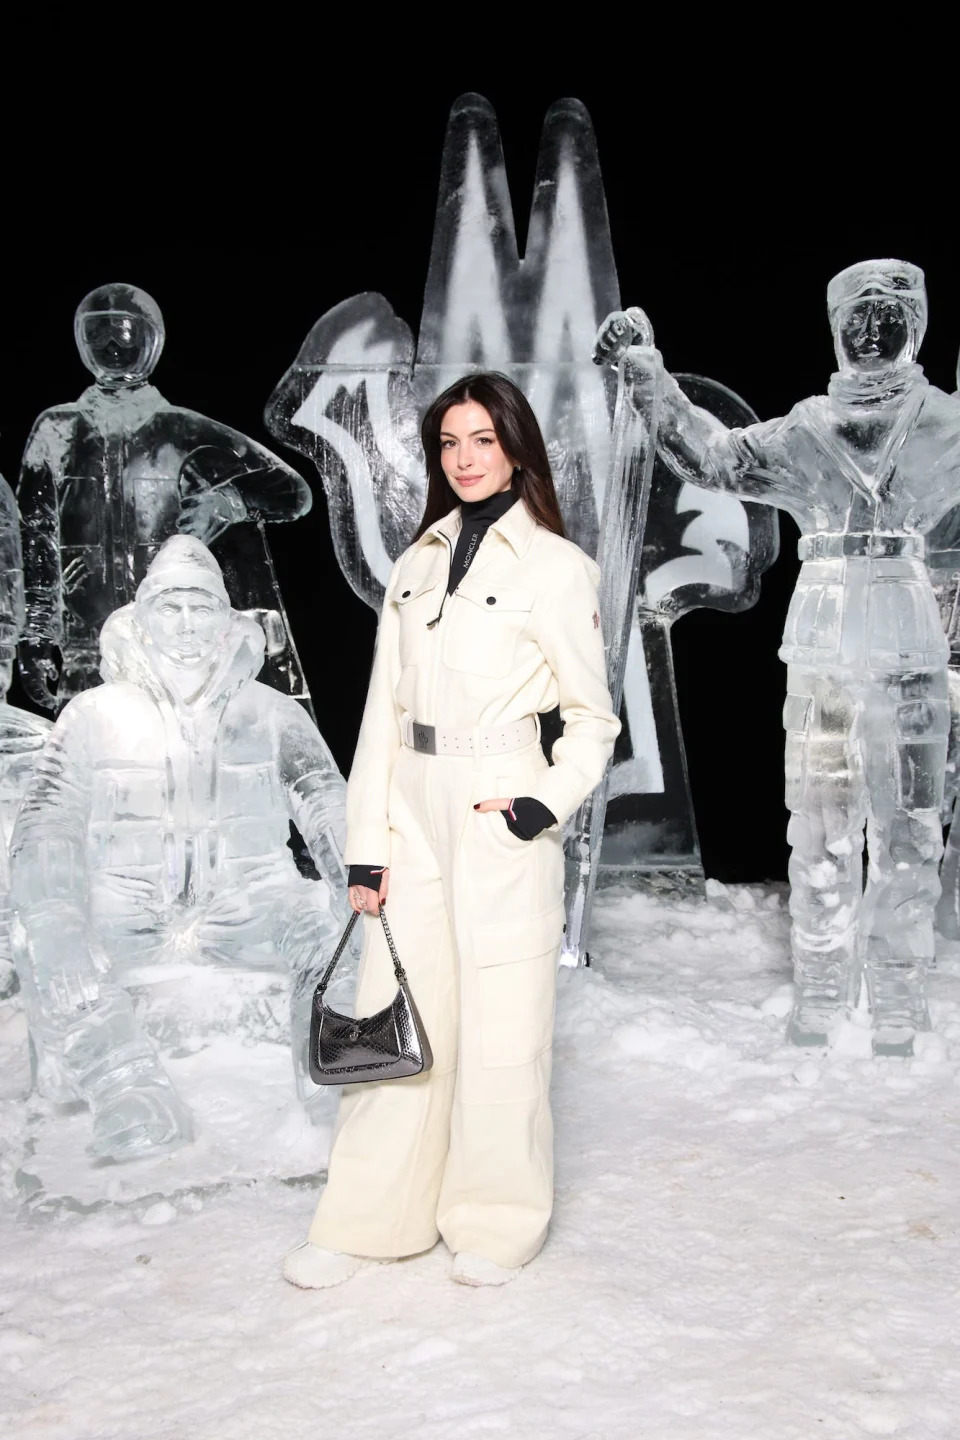 Anne Hathaway attends a Moncler fashion show in Moritz, Switzerland.